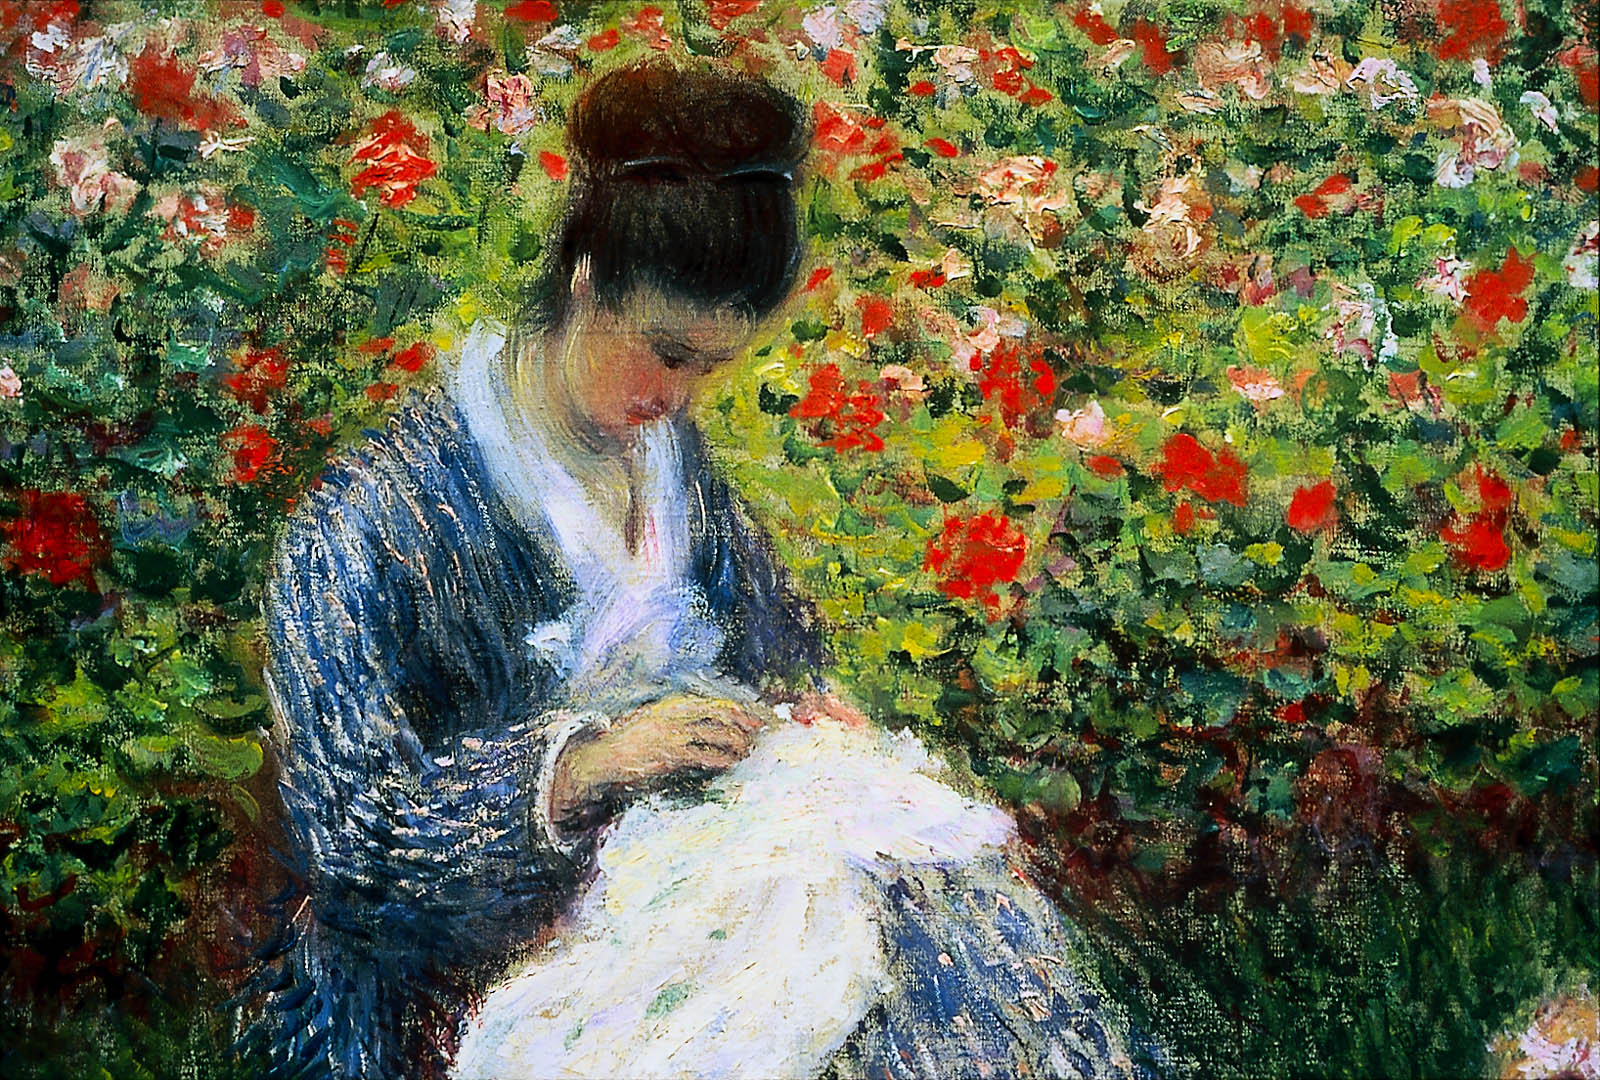 Claude+Monet-1840-1926 (528).jpg